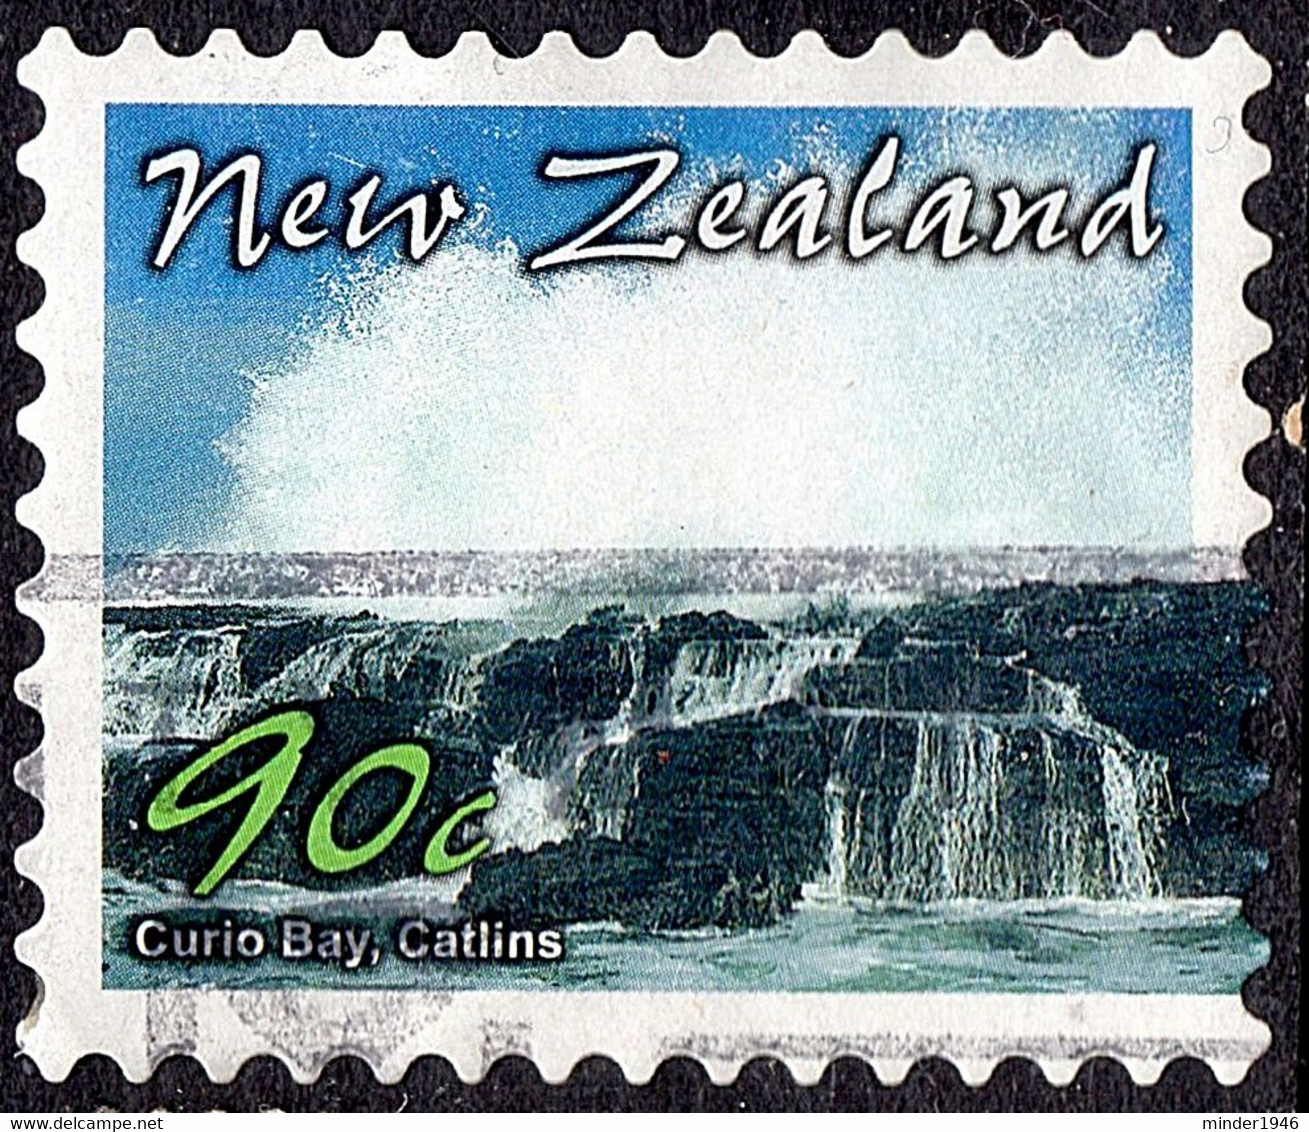 NEW ZEALAND 2002 QEII 90c Multicoloured, Scenery-Curio Bay Catlins SG2517 FU - Oblitérés